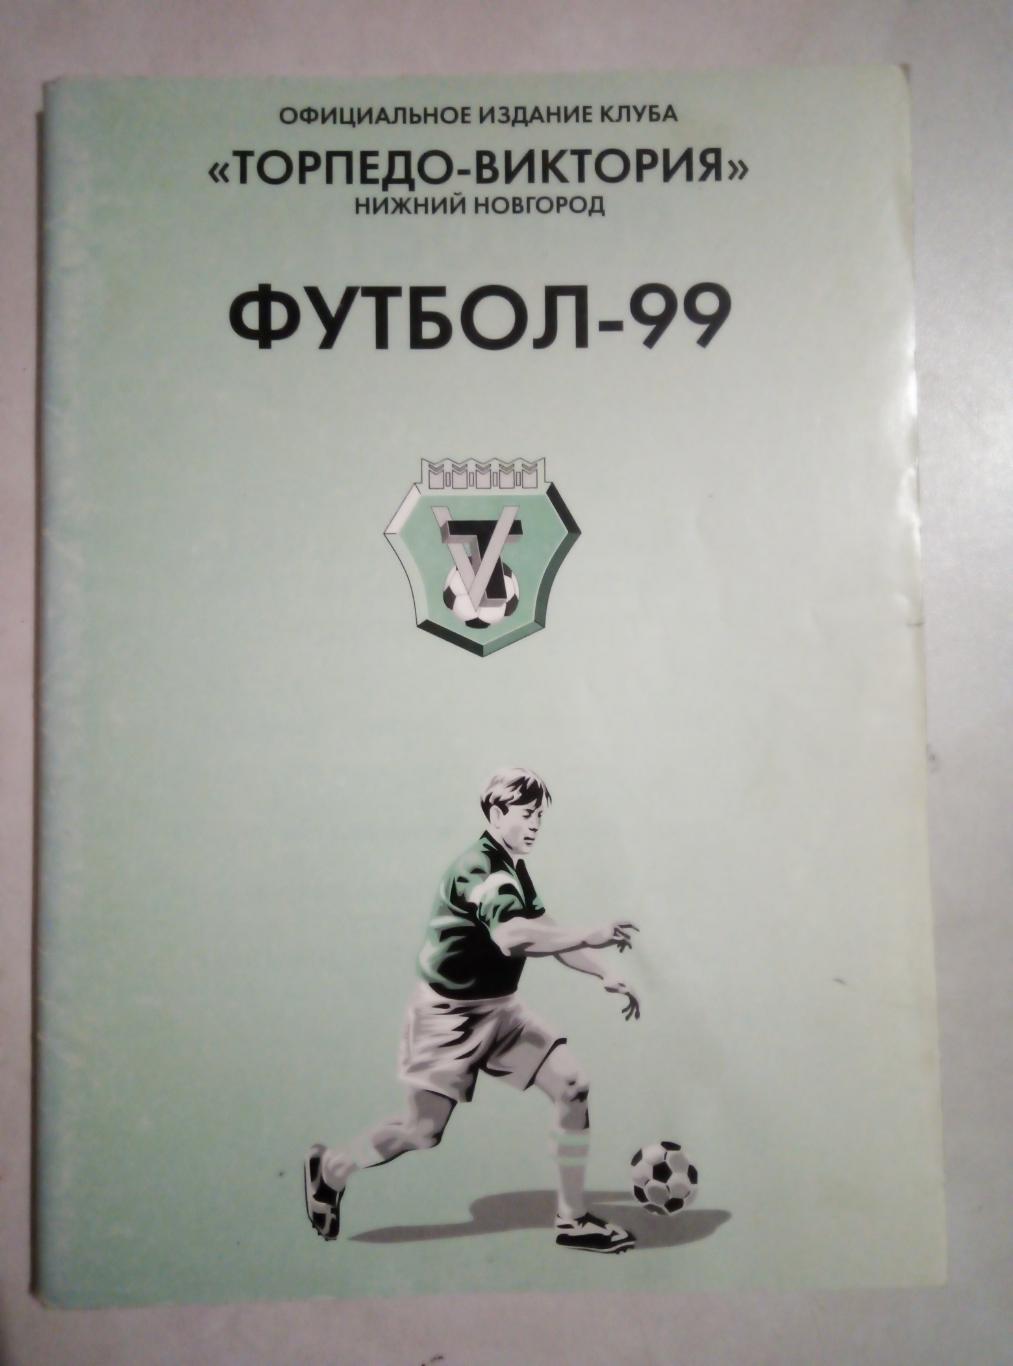 Календарь - справочник Торпедо - Виктория Нижний Новгород1999